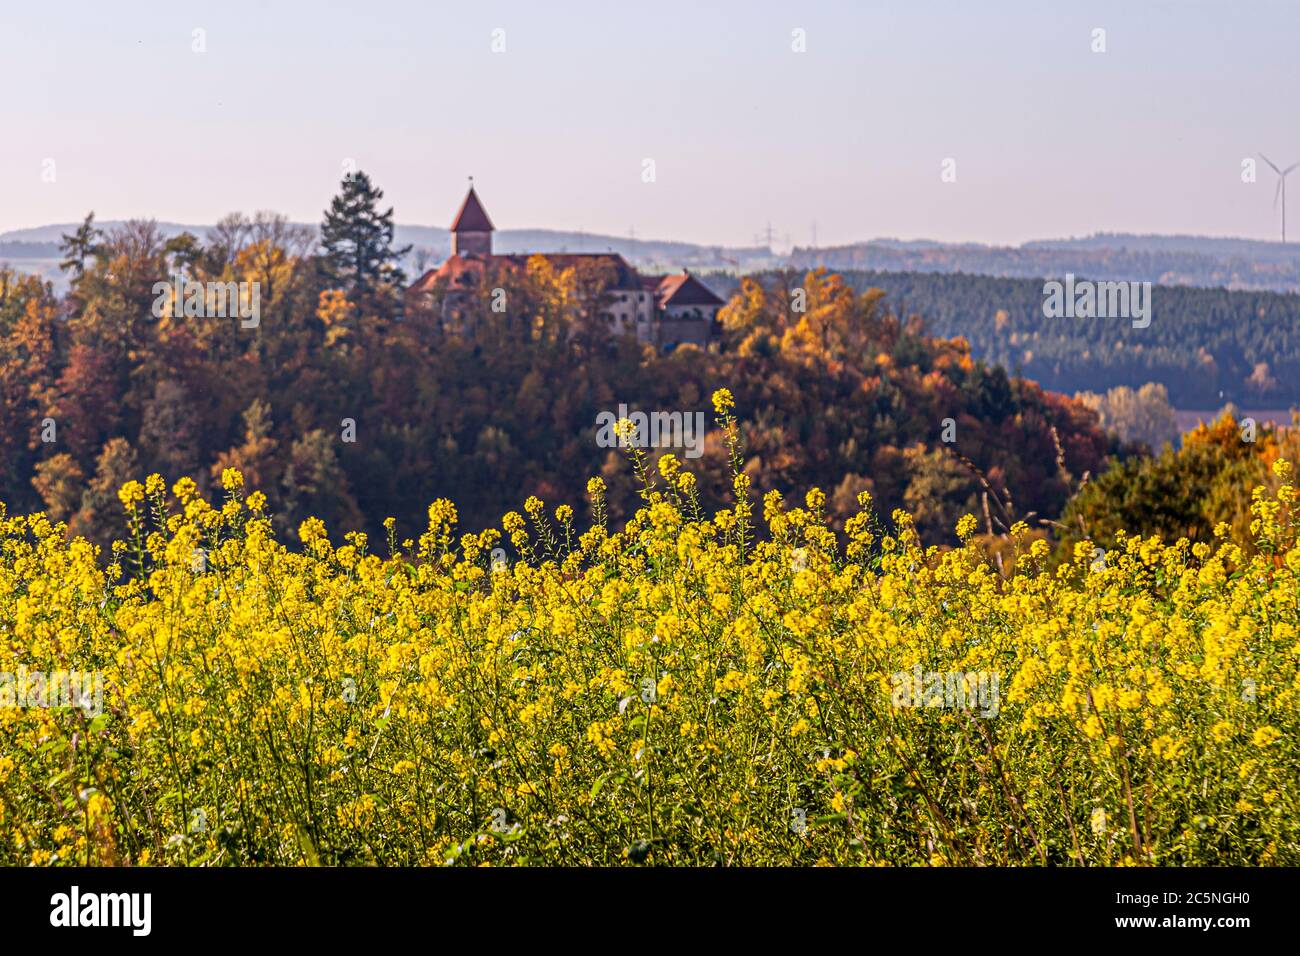 Burg Wernberg German castle in Bavaria with fields and woods in Wernberg-Köblitz, Germany Stock Photo